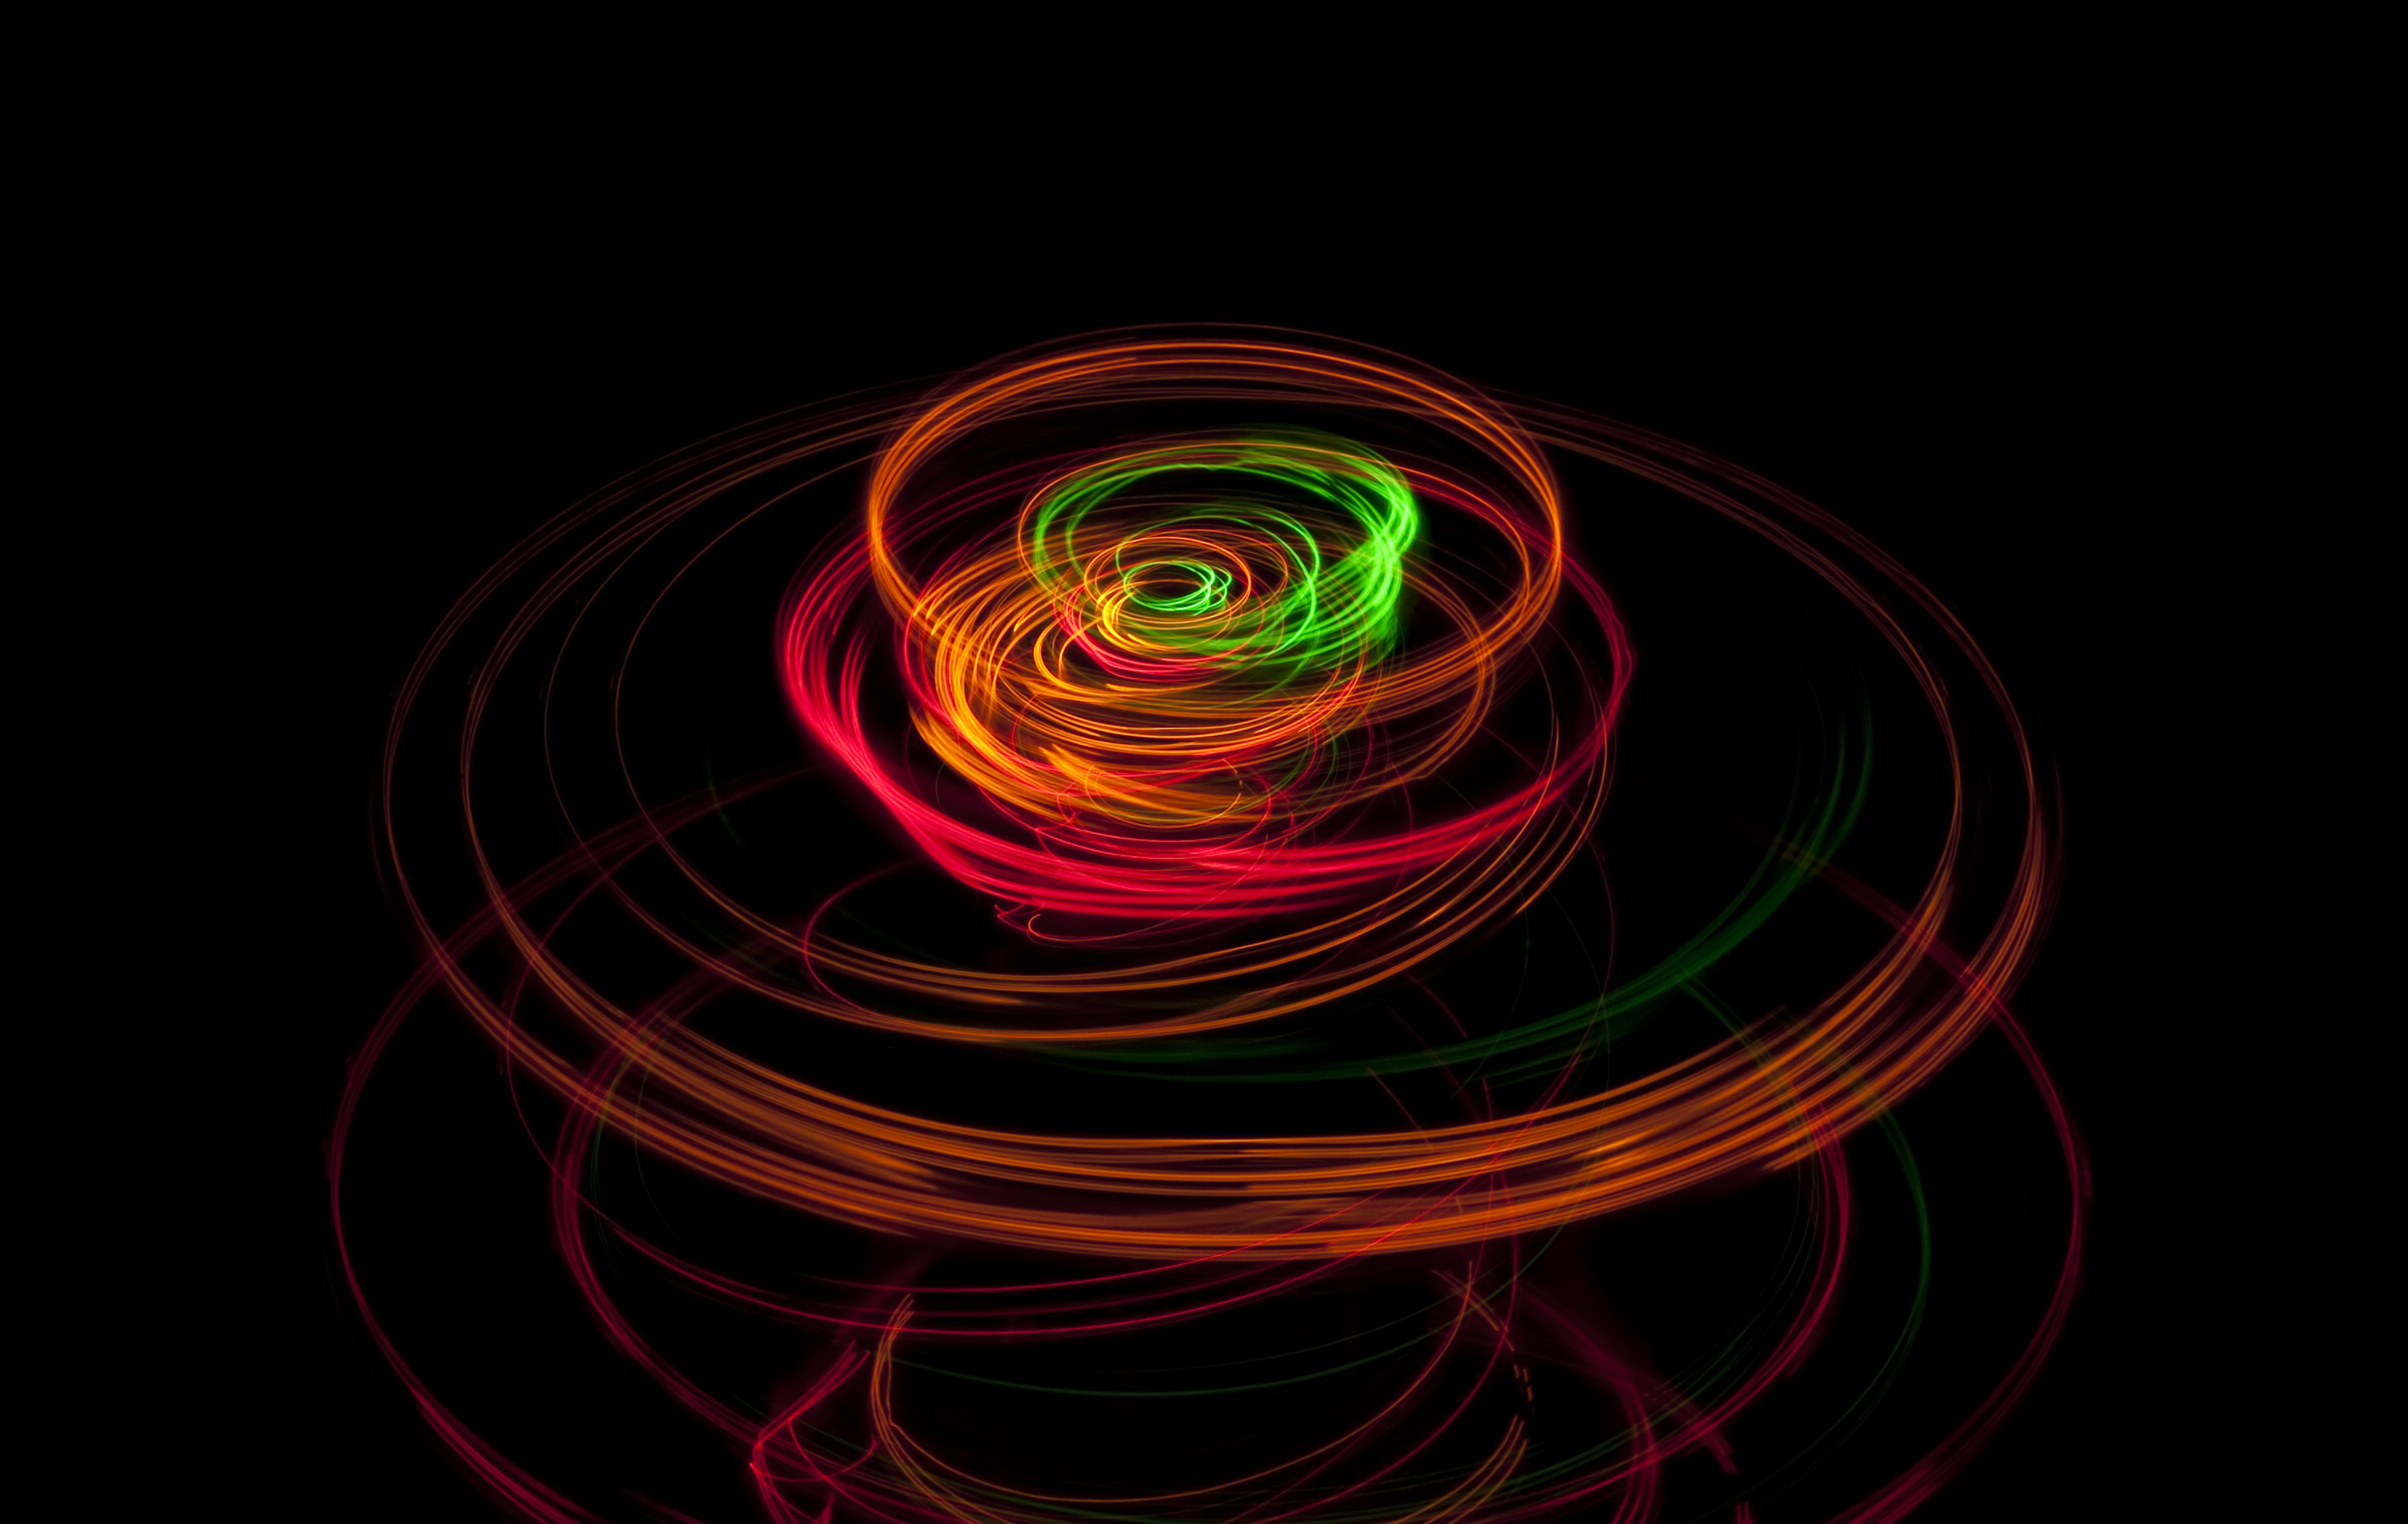 A Long Exposue Image Of Colorful Lights Tracing Circular